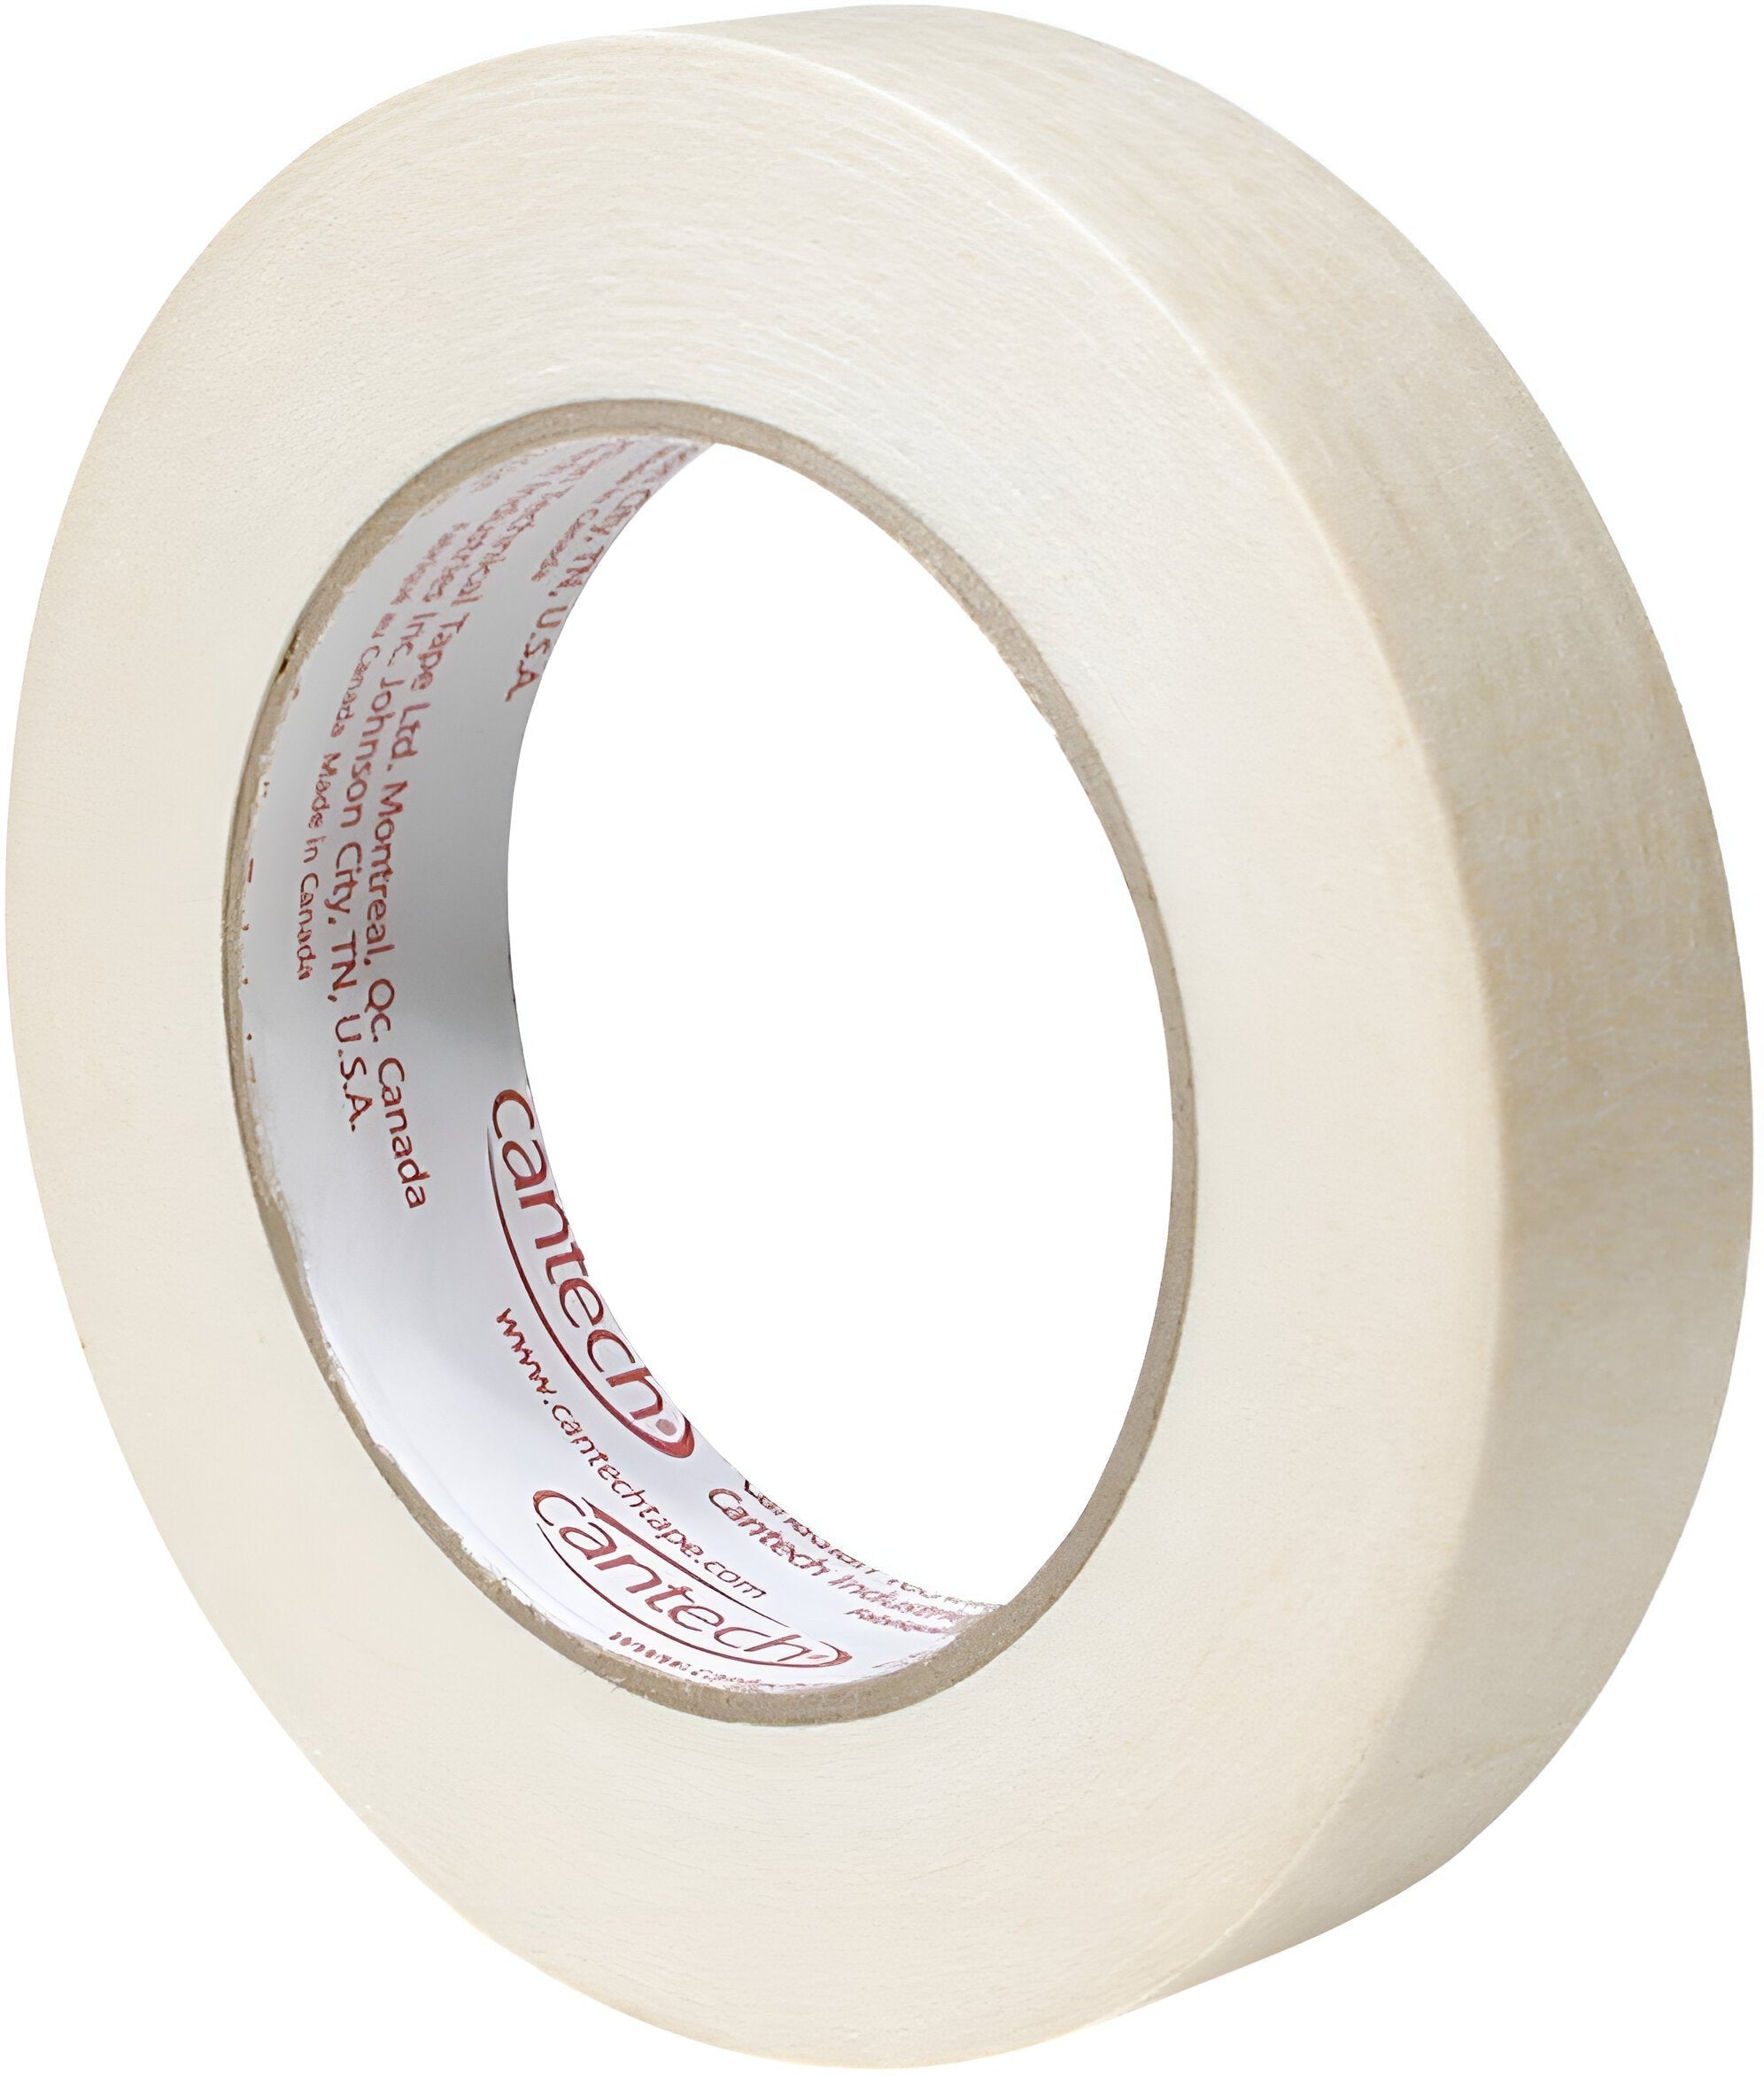 Cantech - 1.5" Utility Paper Masking Tape, 24 Rl/Cs - 101007